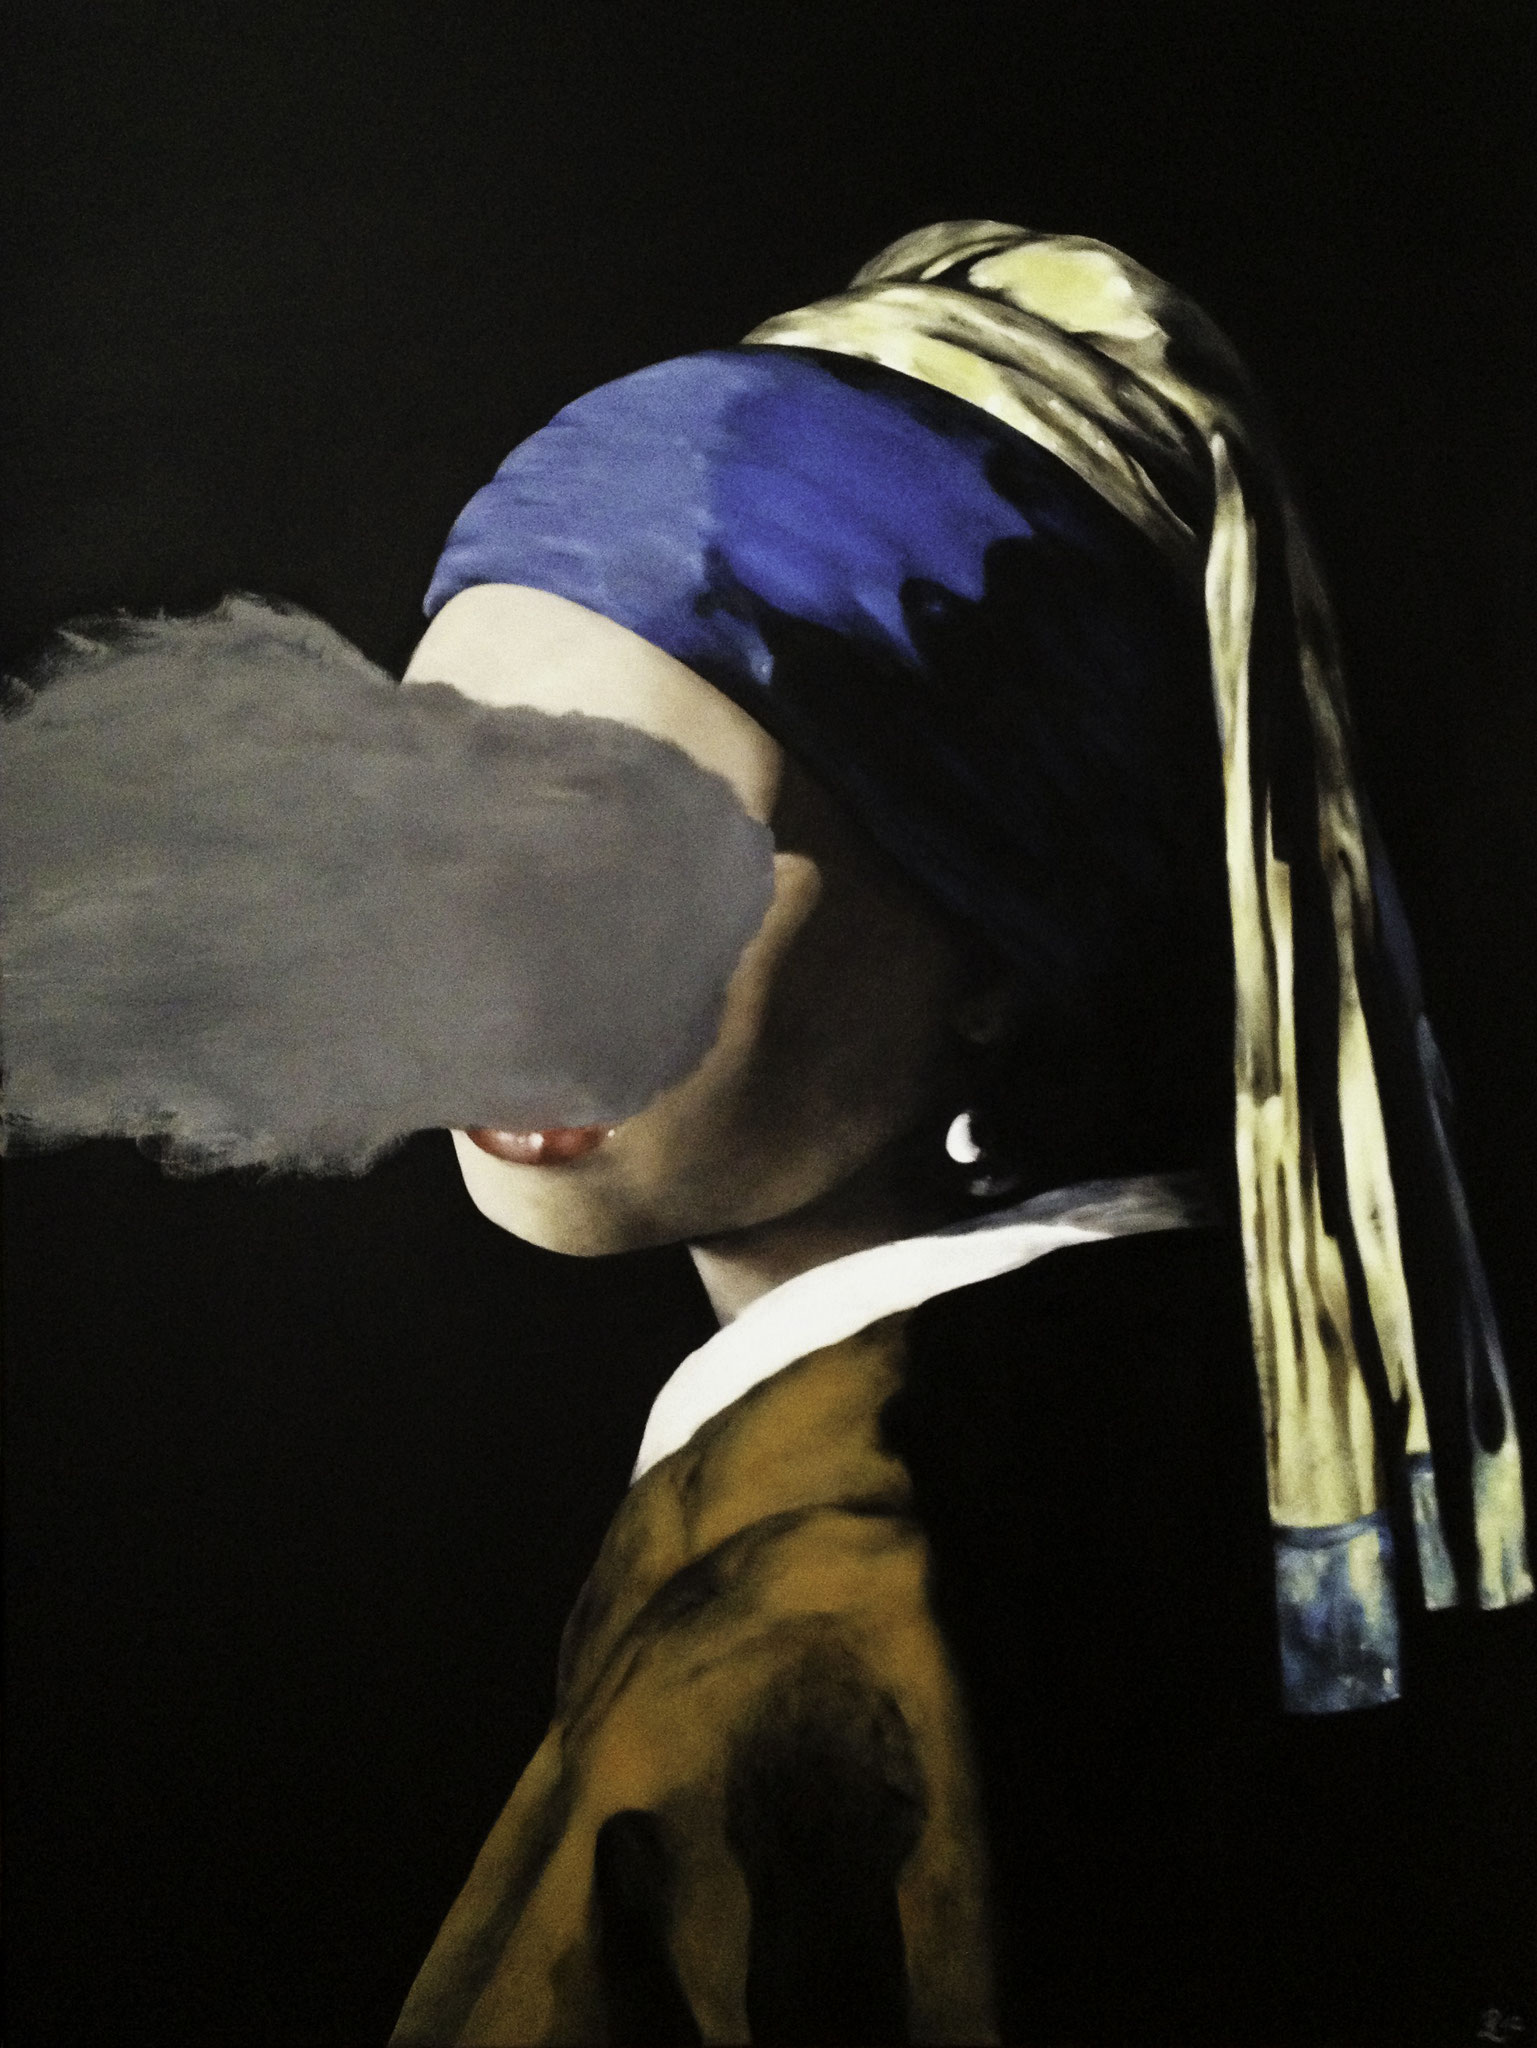 GIRL WITH A PEARL CLOUD, acrylic on canvas, 90 x 120, 2012